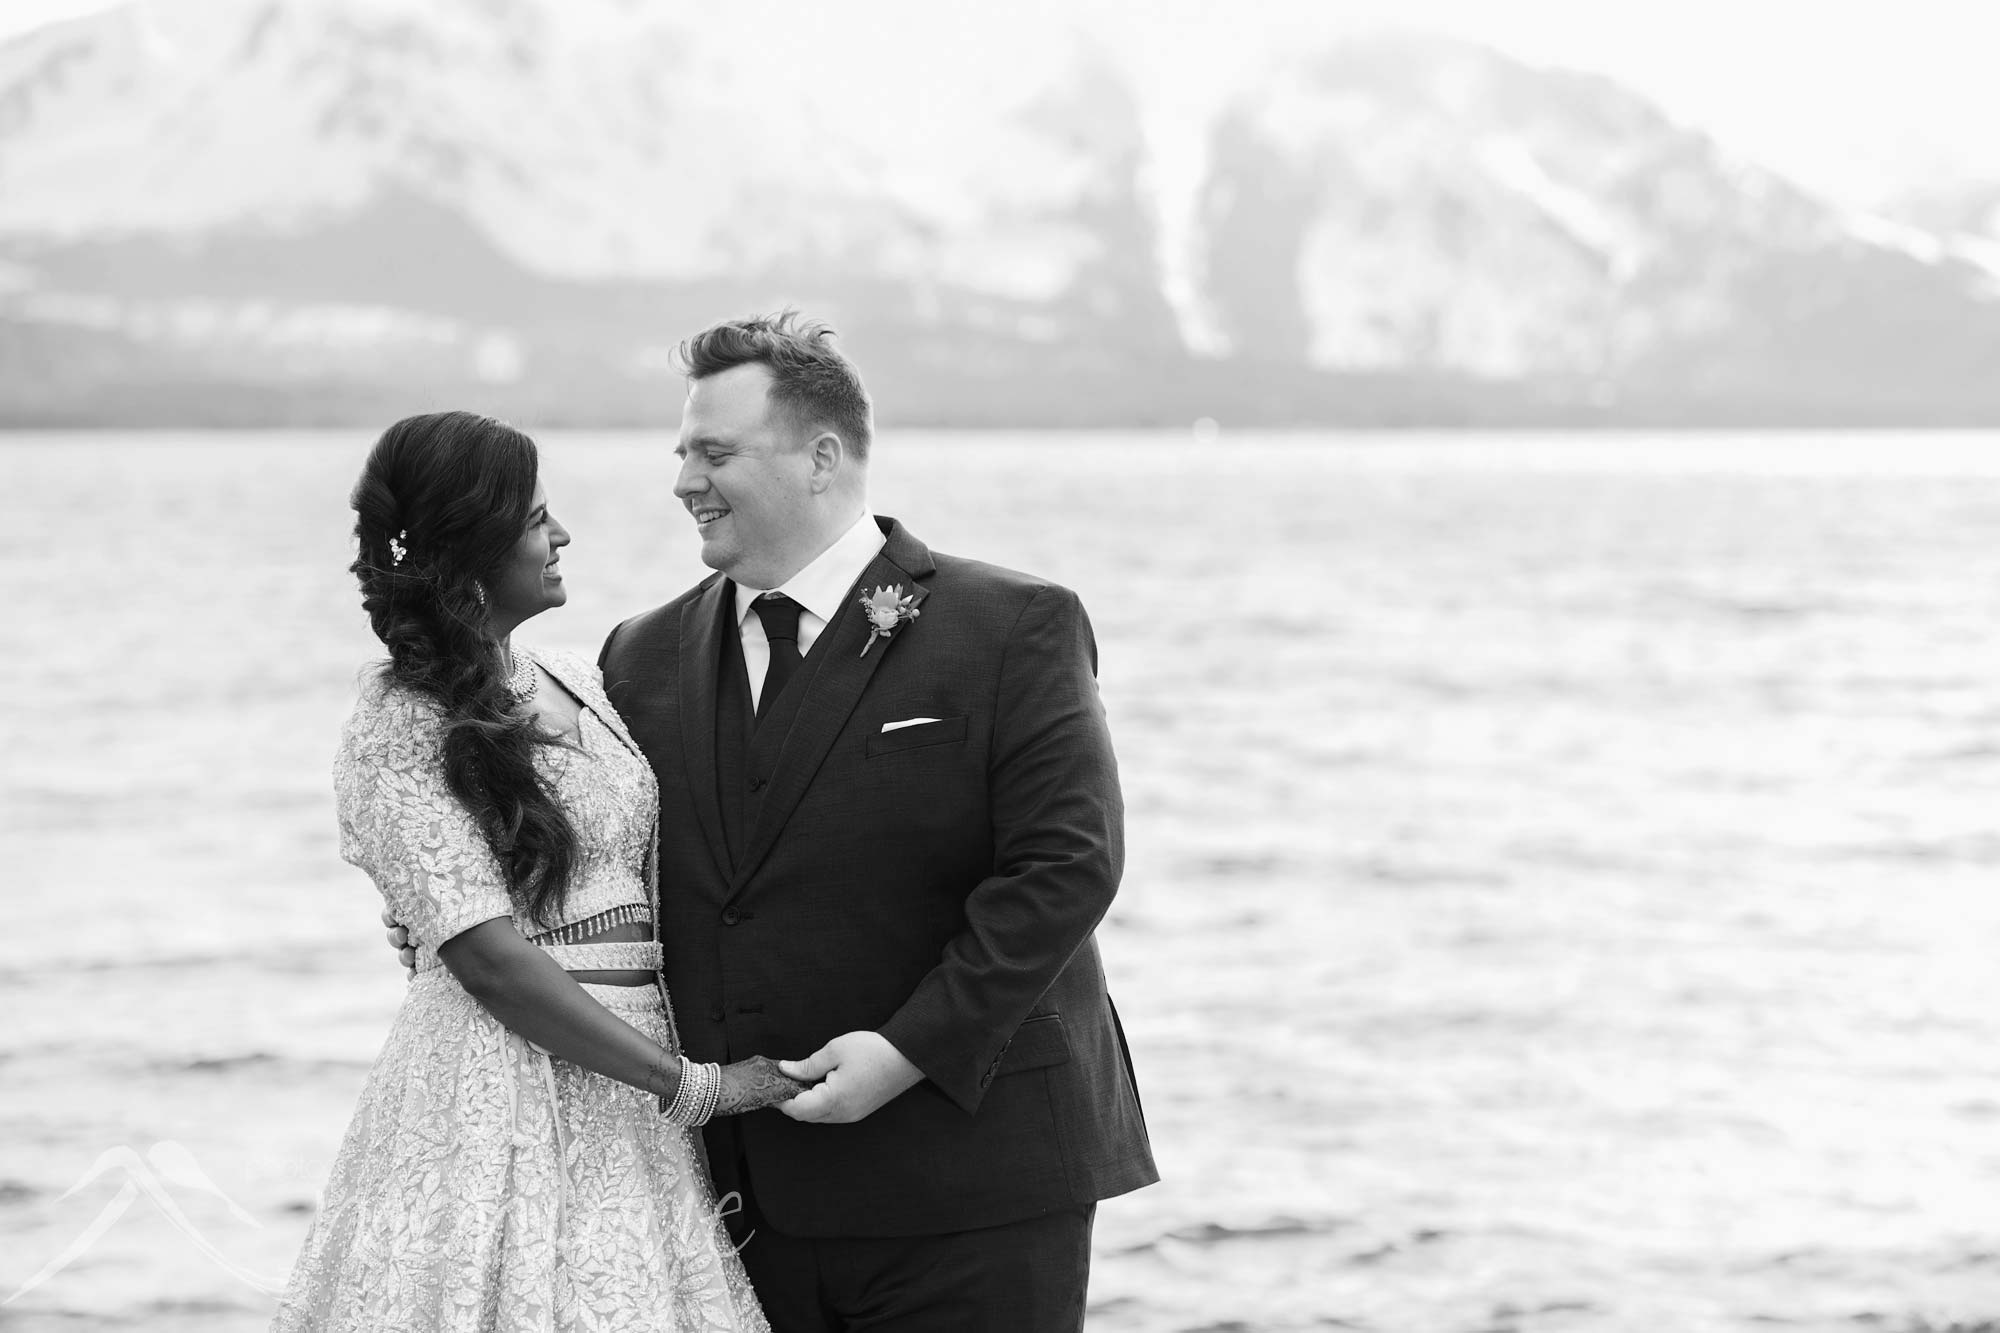 Edgewood Tahoe wedding photography, Priya and Chris